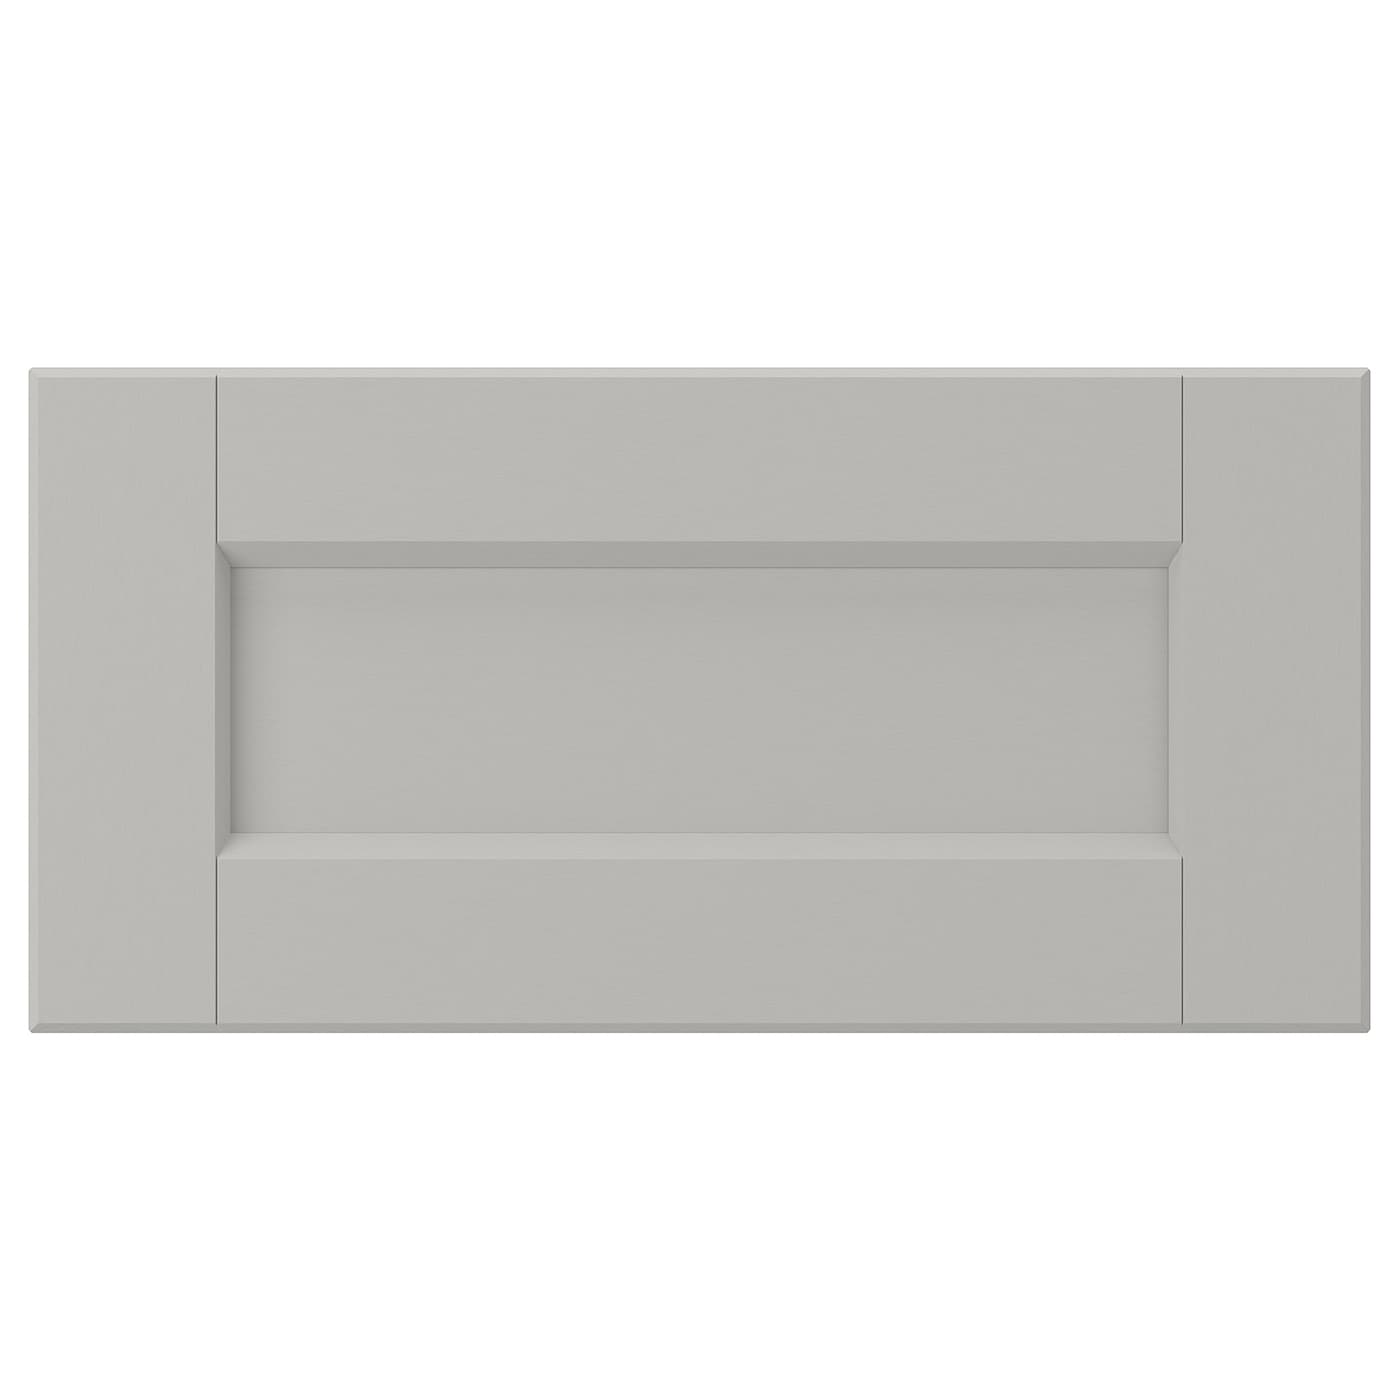 Фасад ящика - IKEA LERHYTTAN, 20х40 см, светло-серый, ЛЕРХЮТТАН ИКЕА